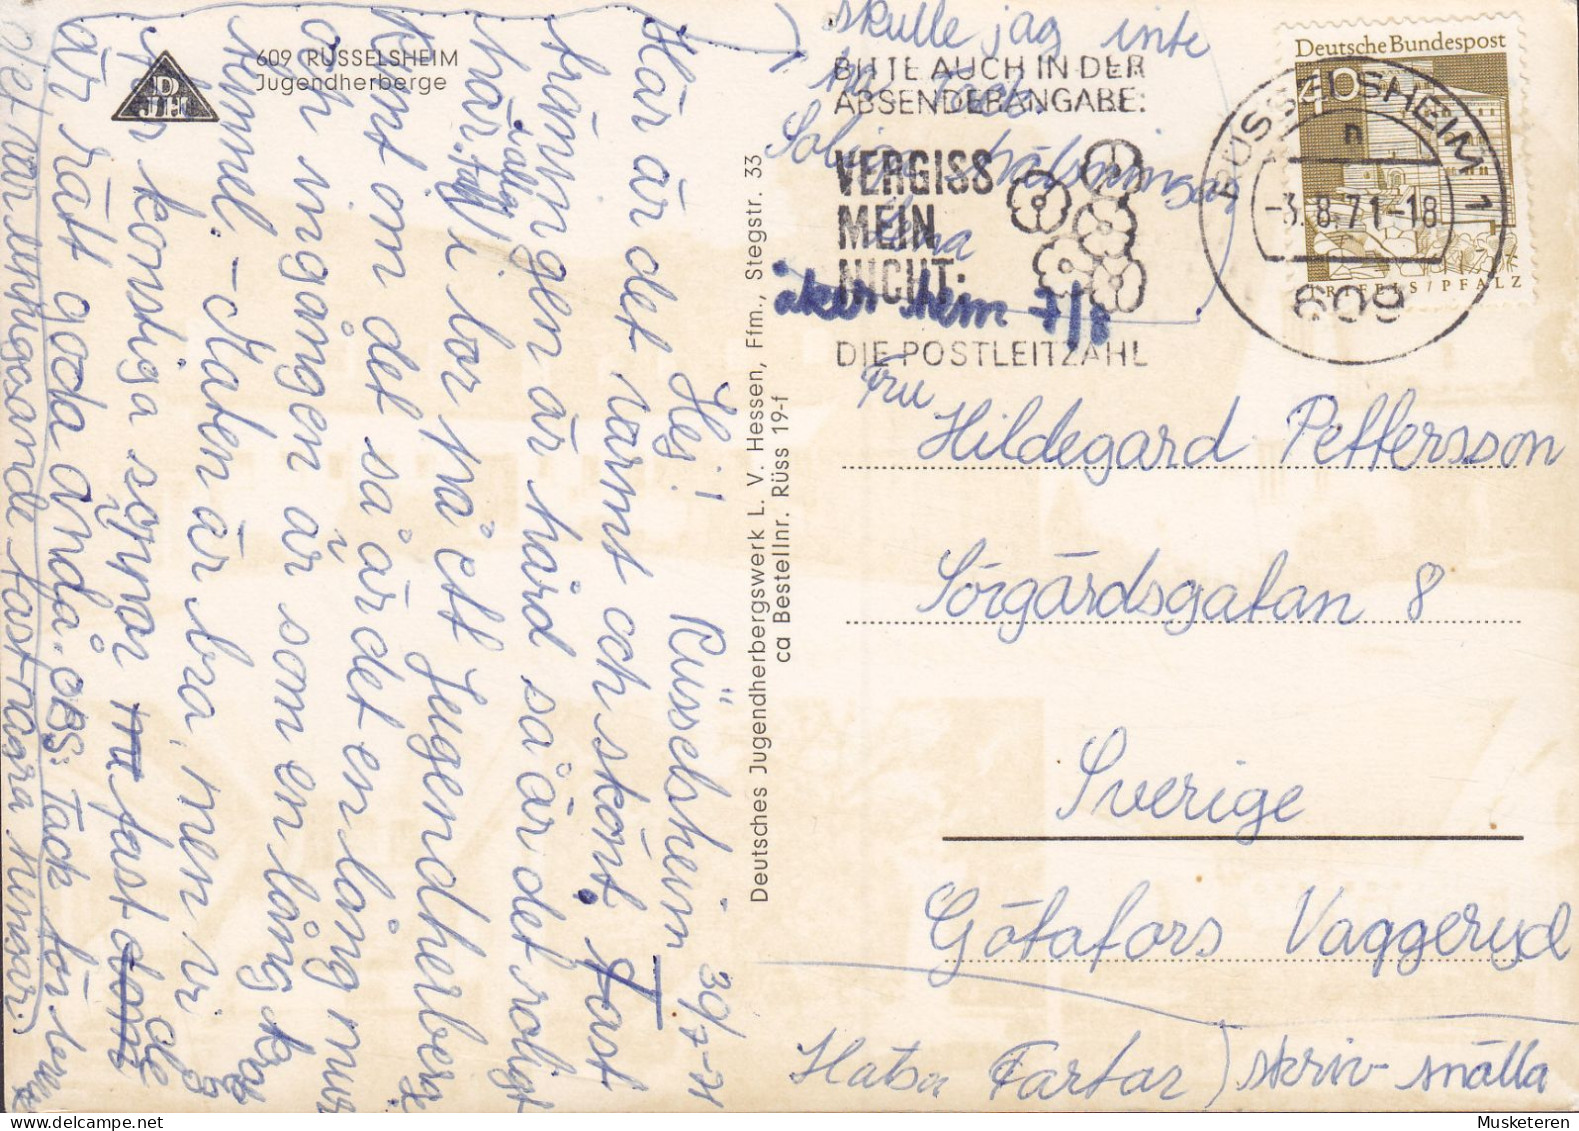 Bundespost PPC Rüsselsheim Jugendherberge L. V. Hessen Slogan RÜSSELSHEIM 1971 GÖTAFORS Vaggaryd Sweden (2 Scans) - Rüsselsheim